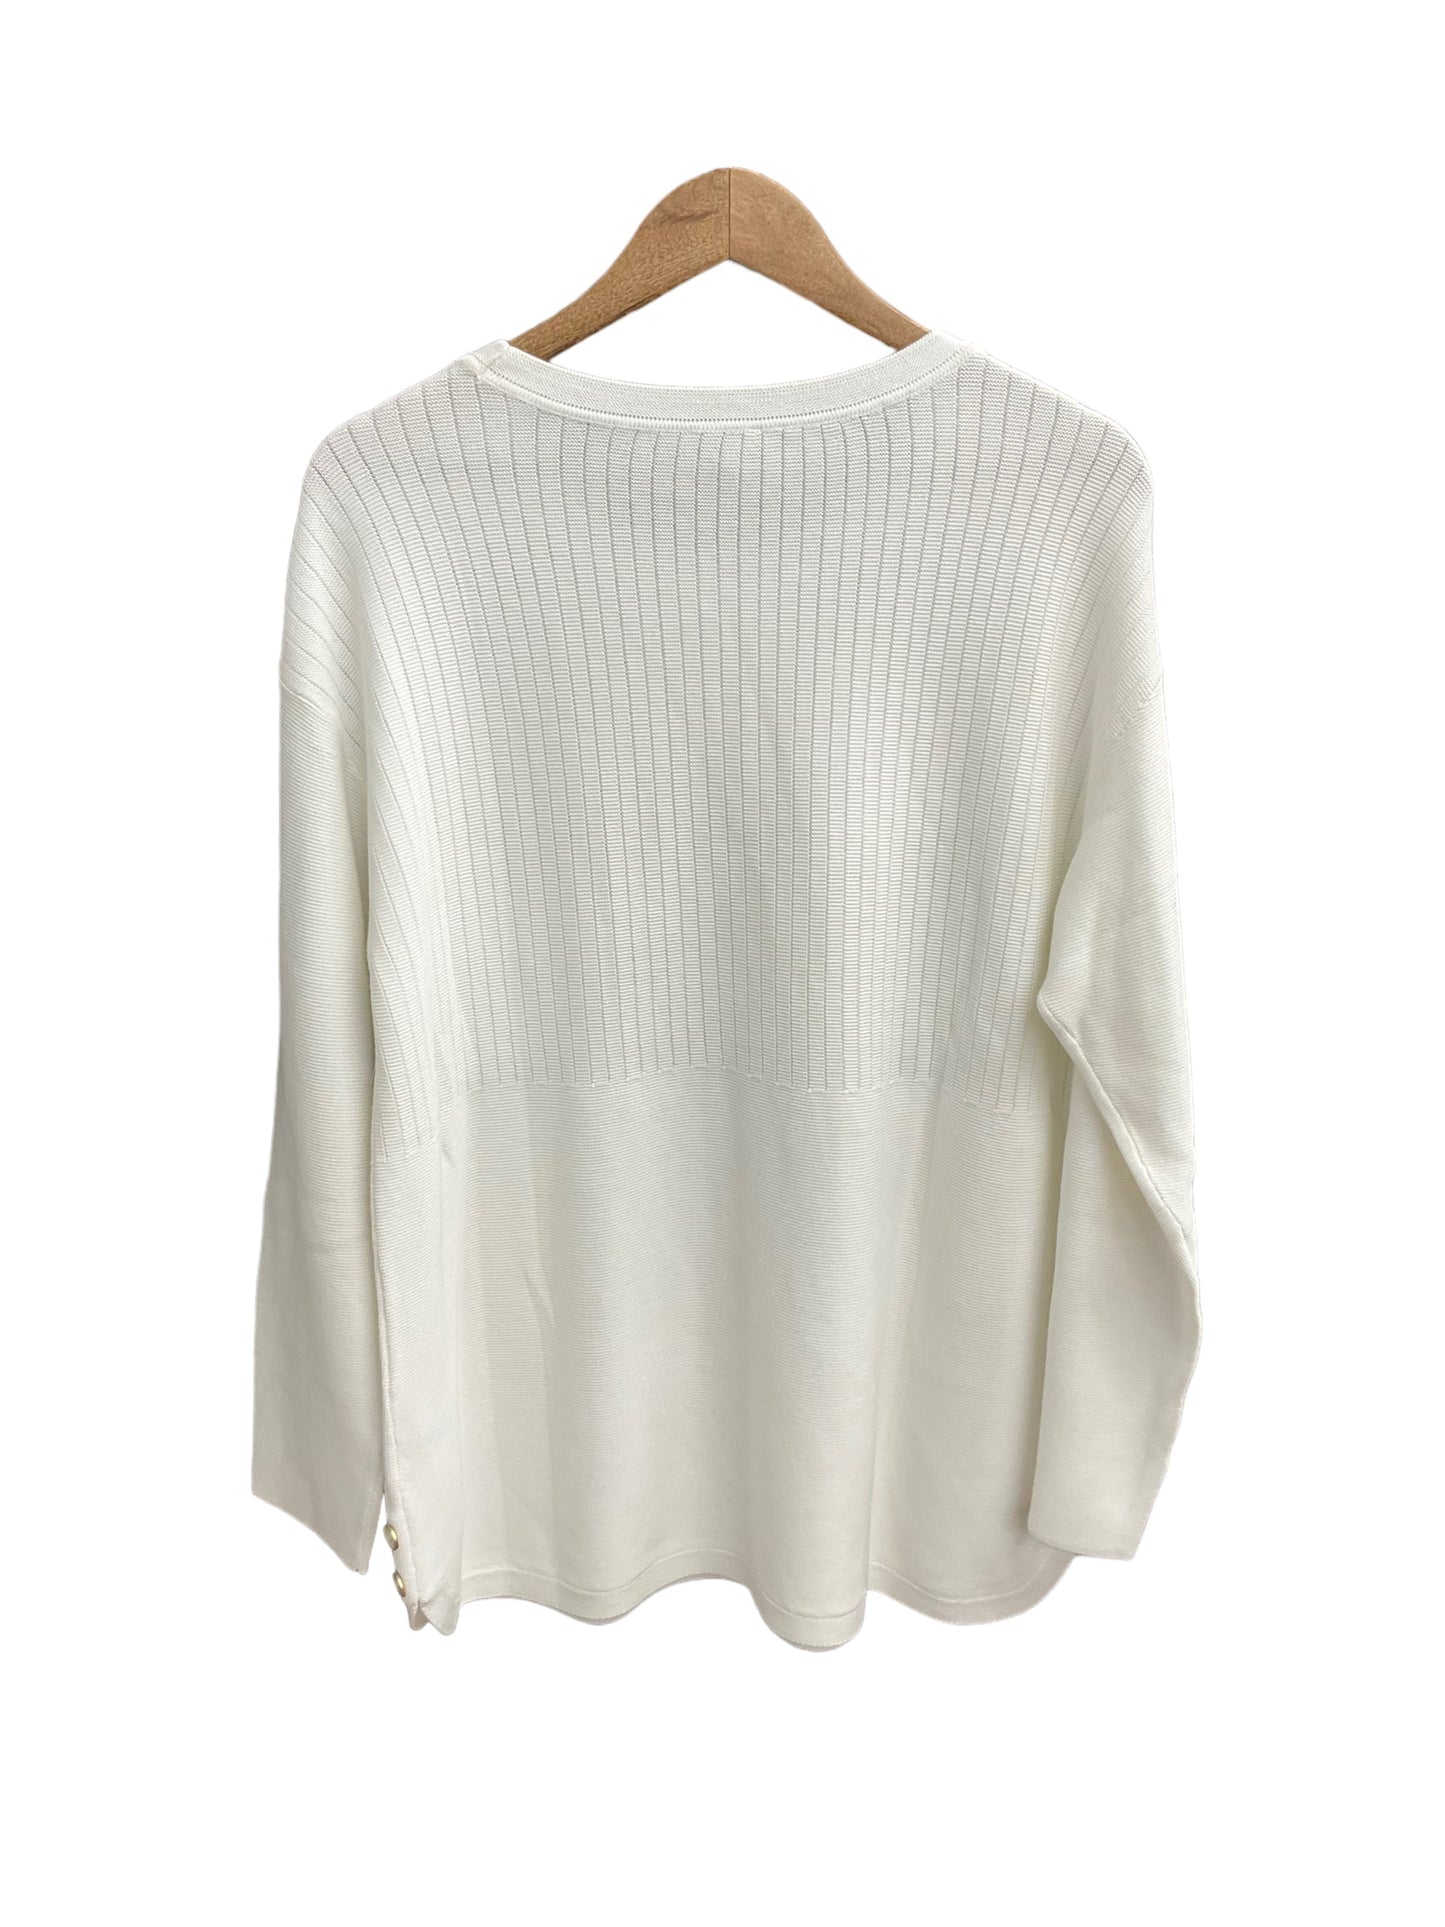 Sweater Cardigan By Talbots  Size: Xl